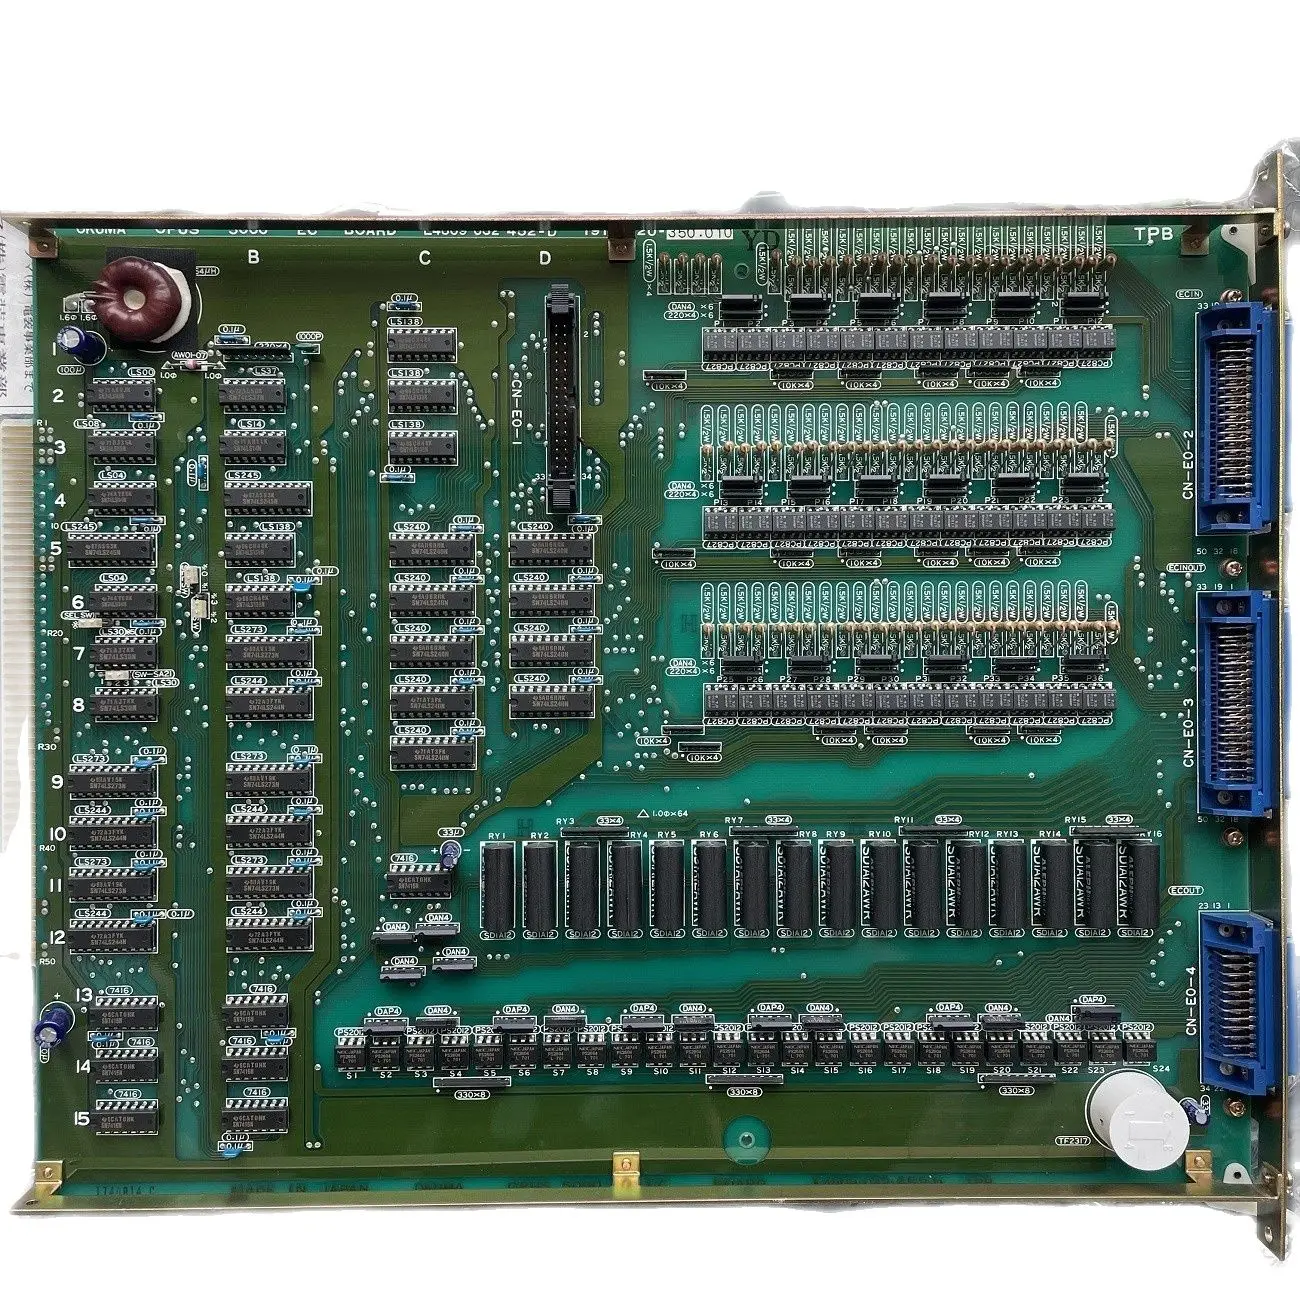 

E4809-032-452 OKUMA Board Numerical CNC Control Drive Board Warranty 3 Months